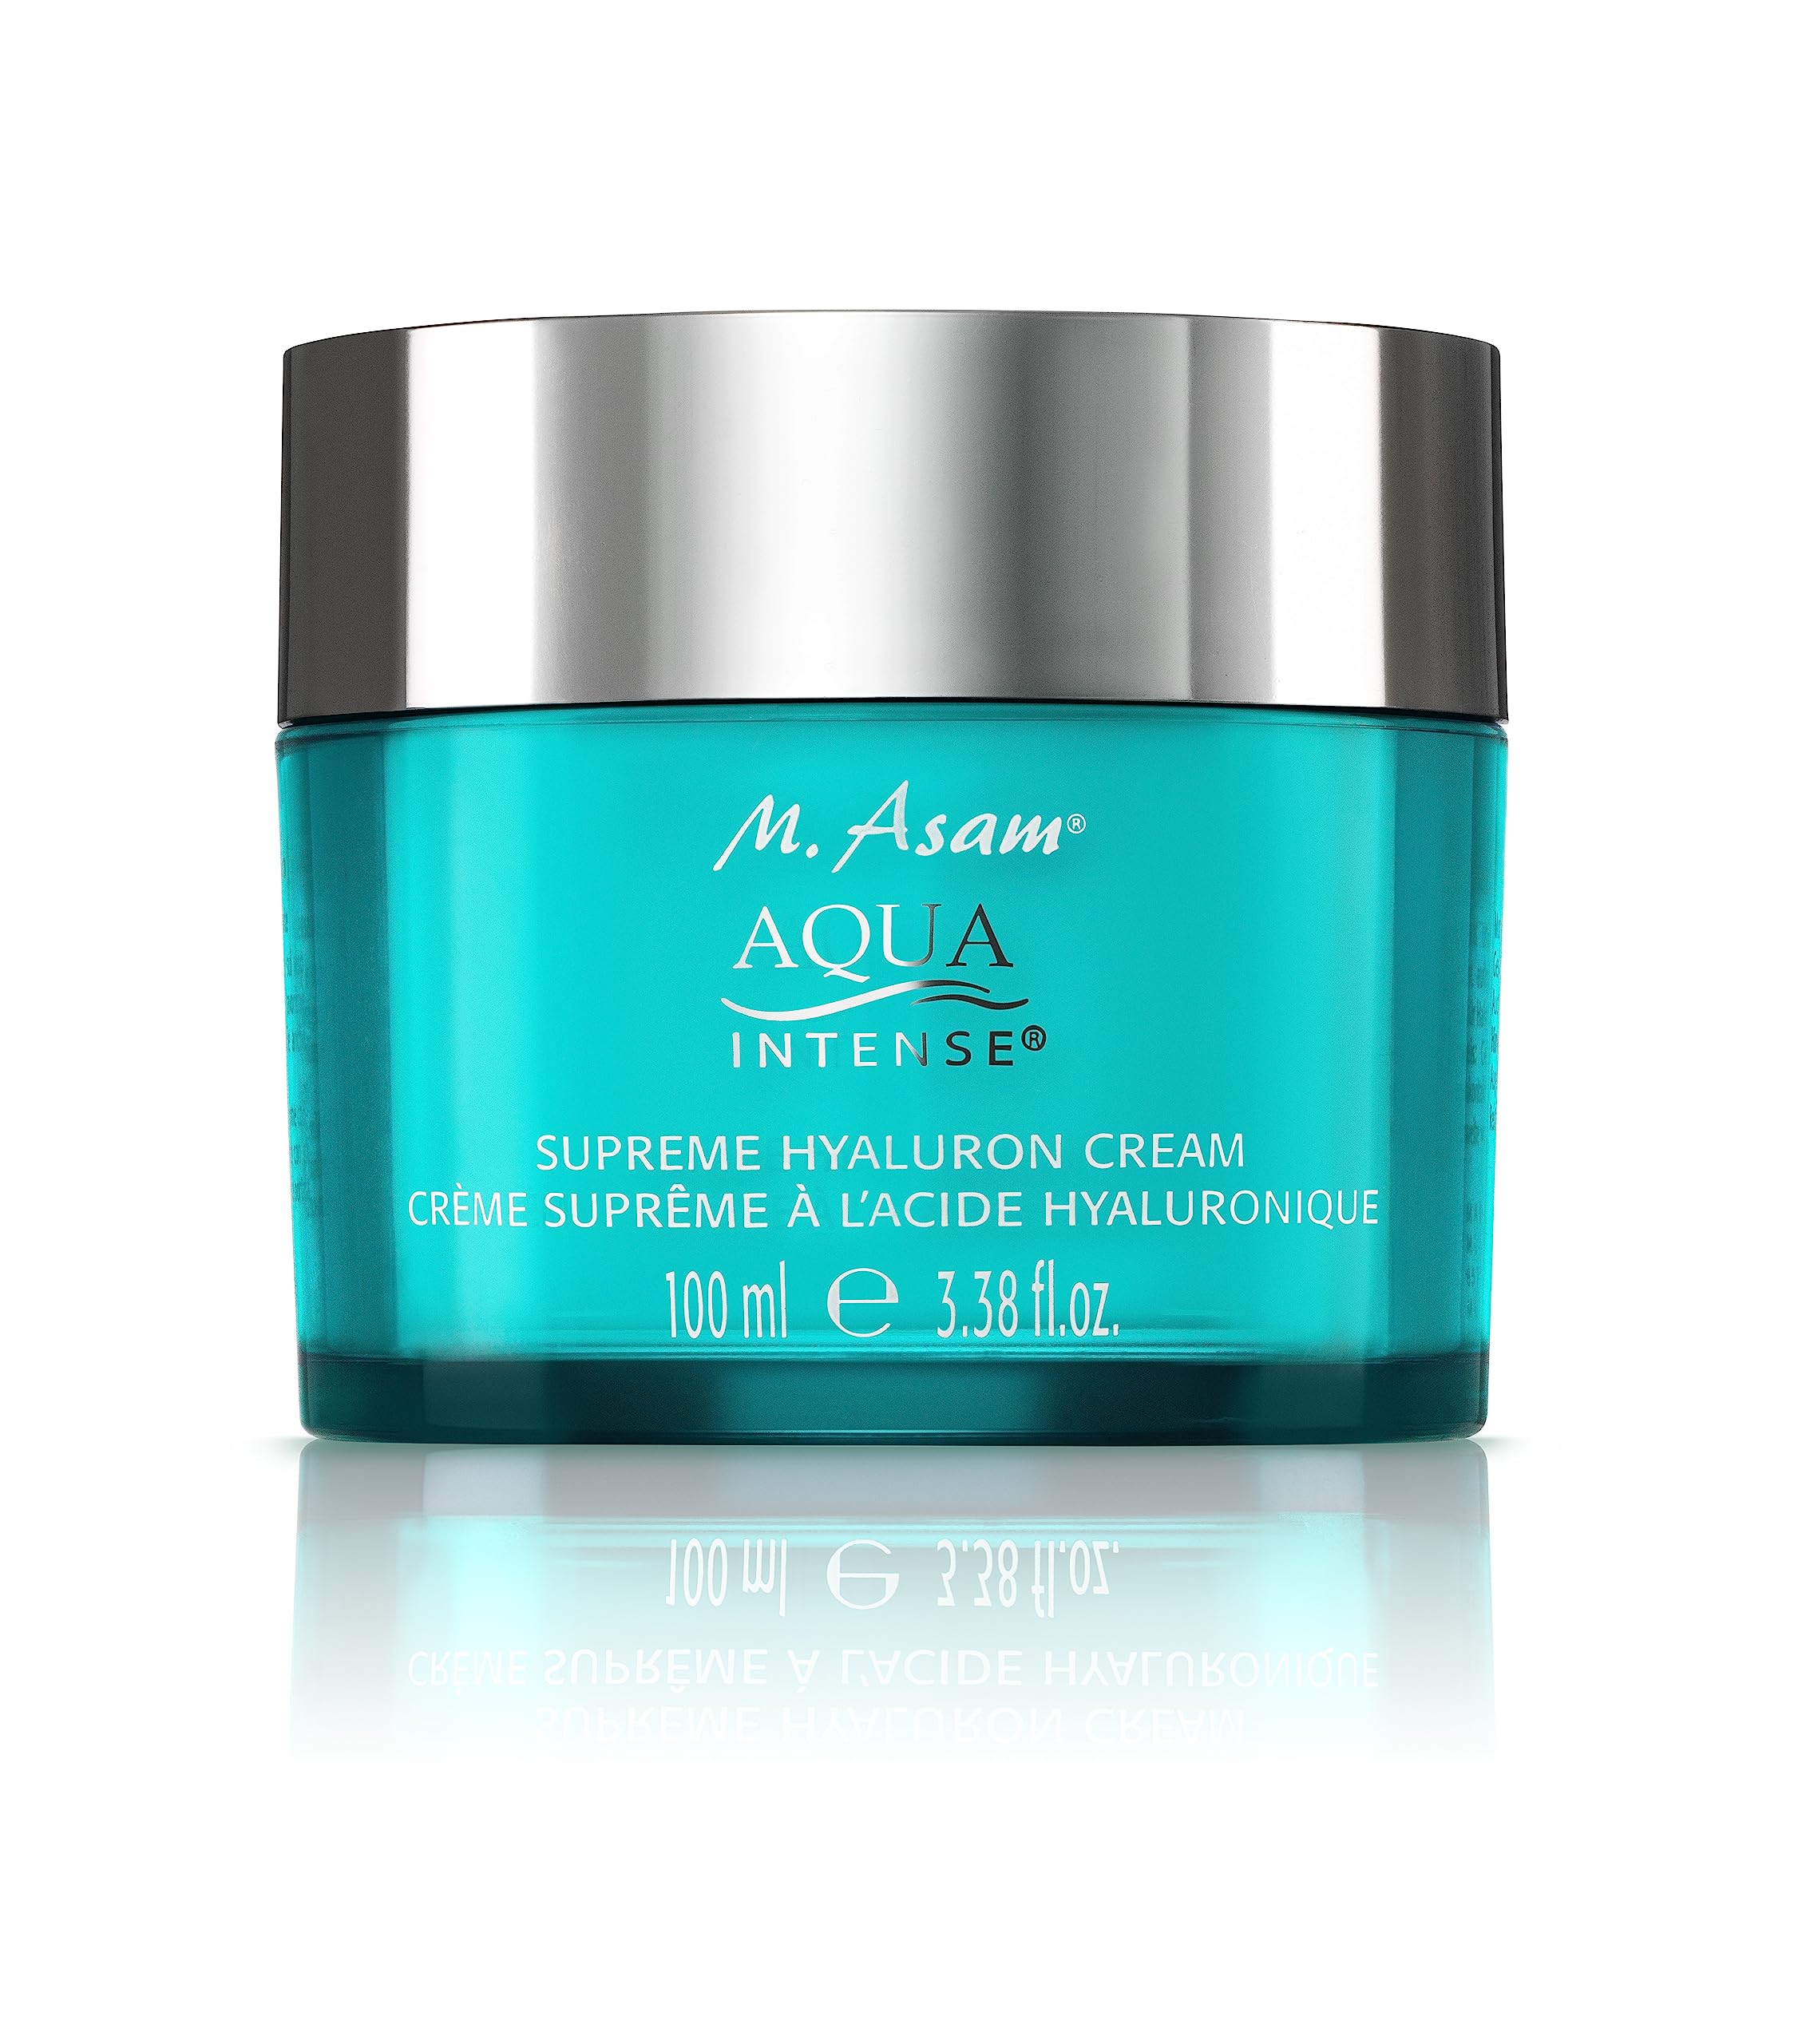 M. Asam Aqua Intense Face Moisturizer - Supreme Face Cream with Hyaluronic Acid targets fine lines & wrinkles & provides intense